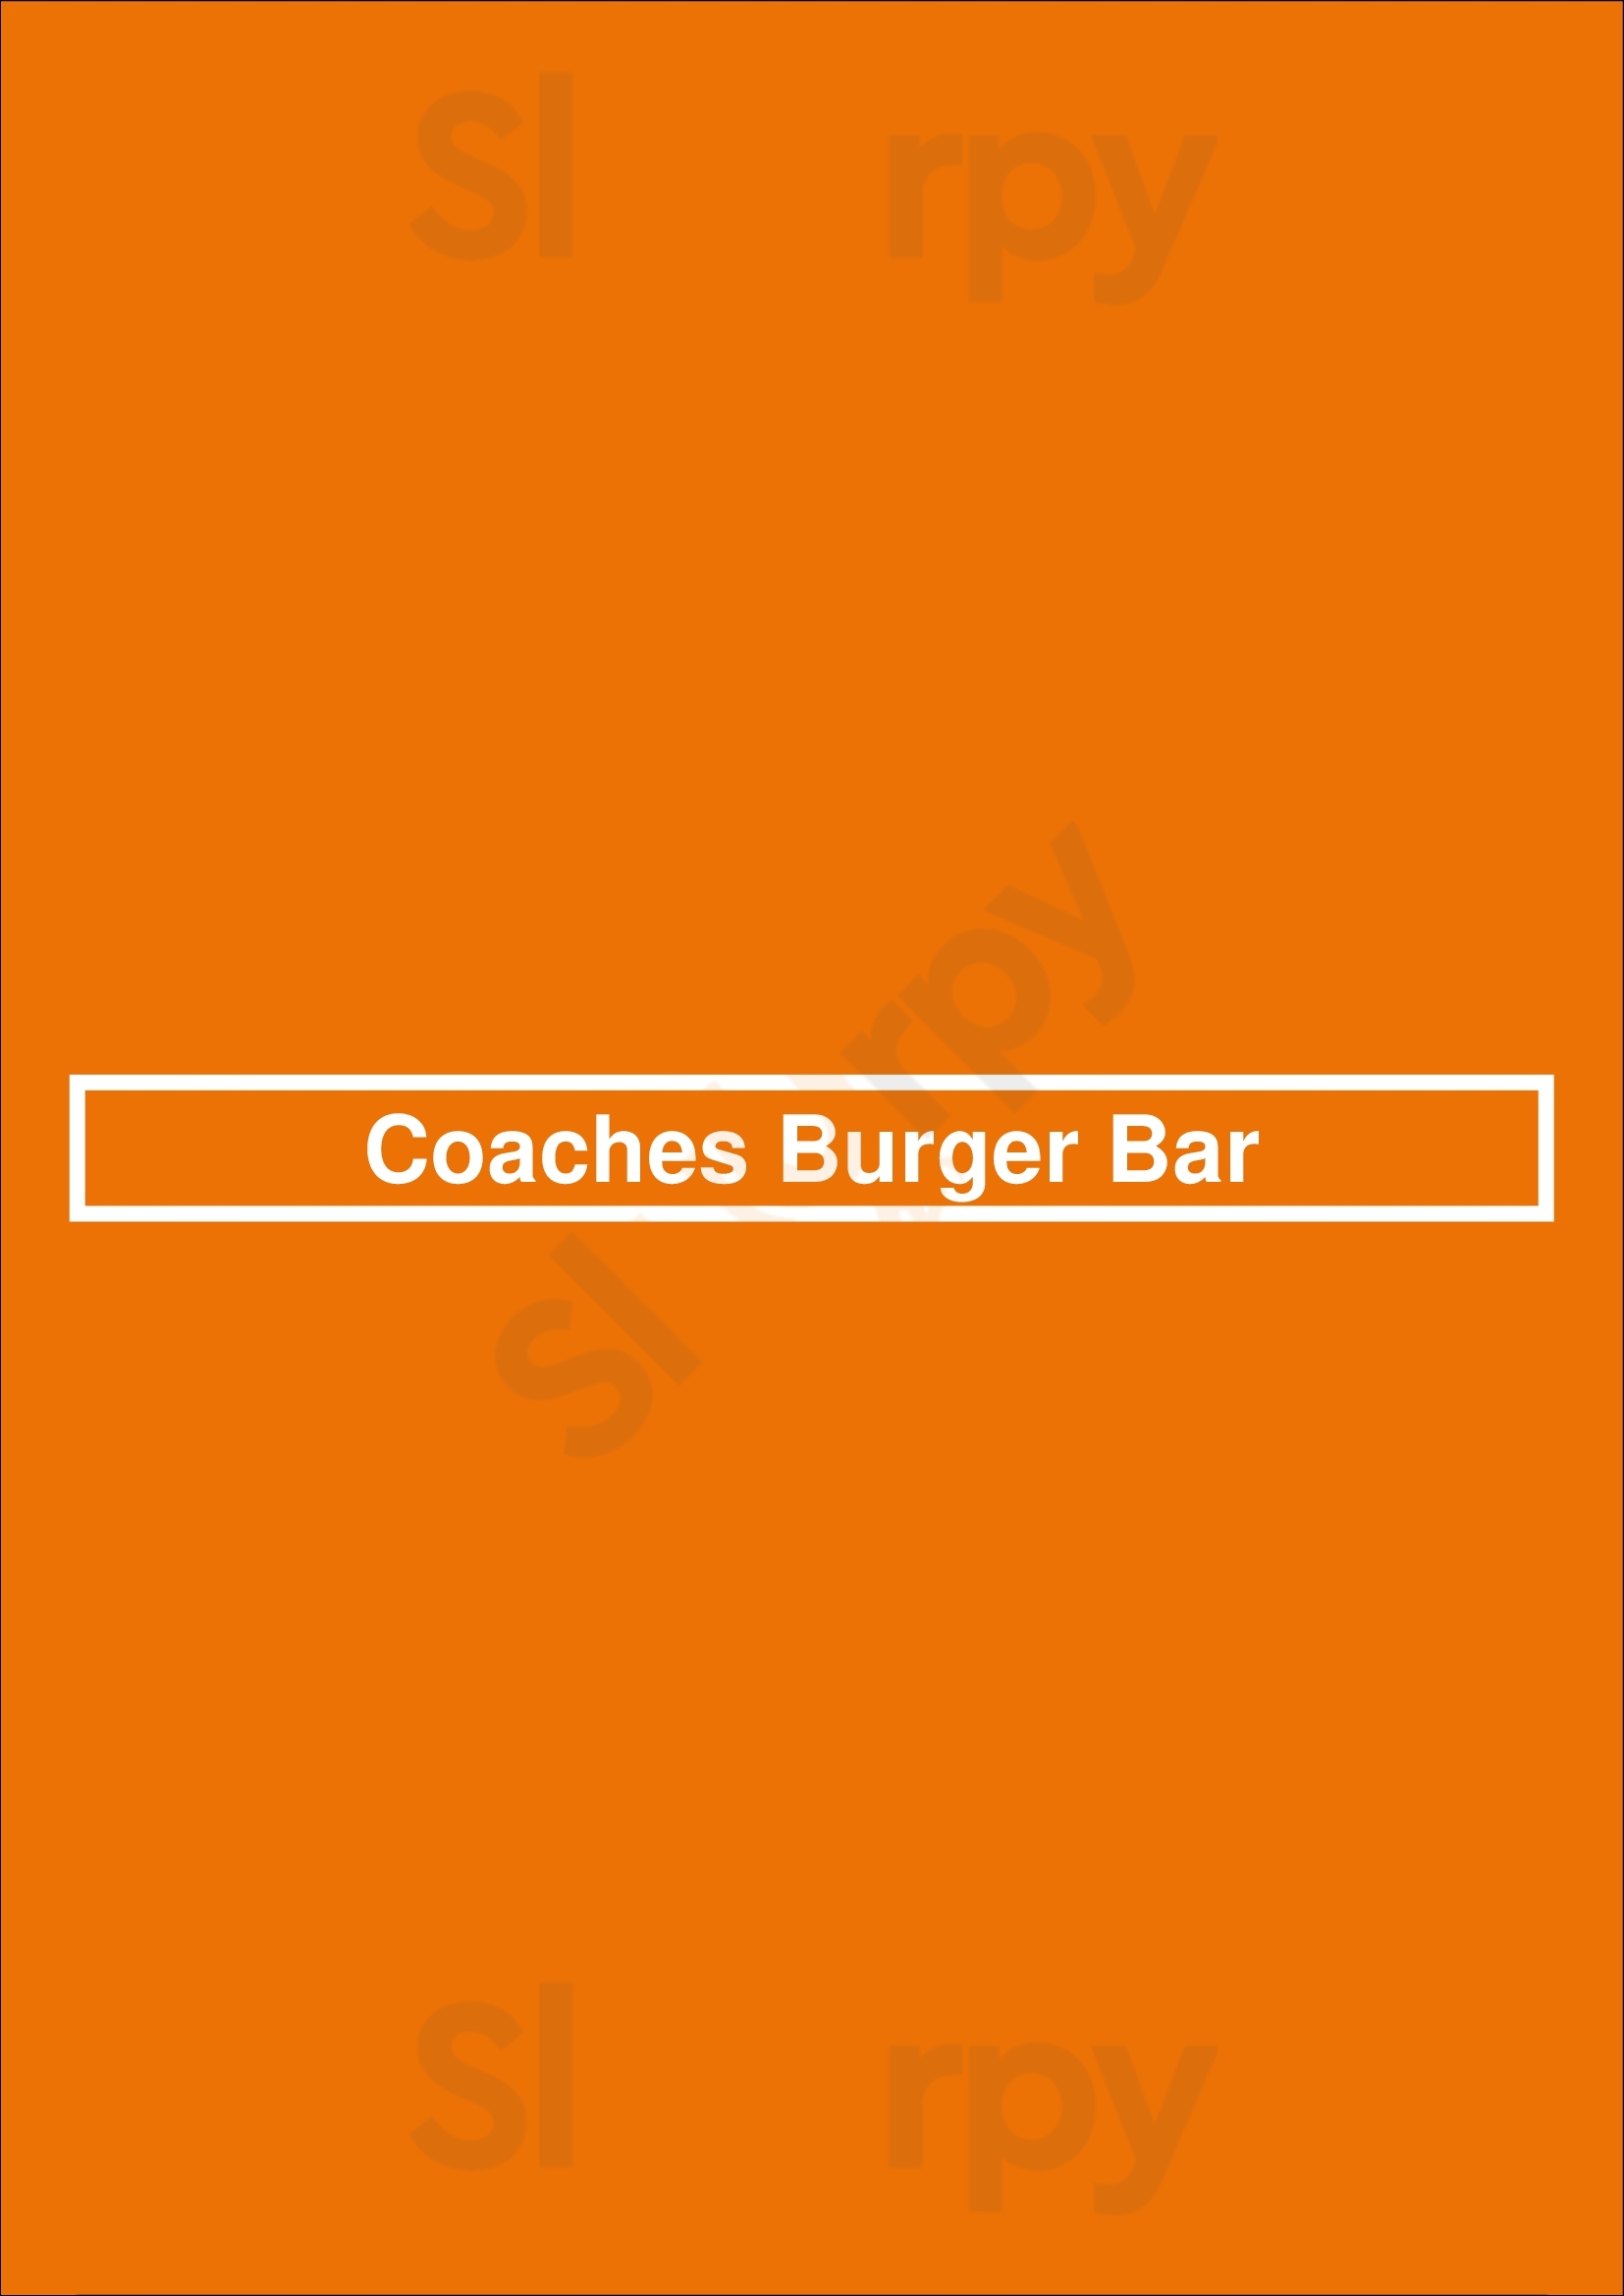 Coaches Burger Bar Poland Menu - 1